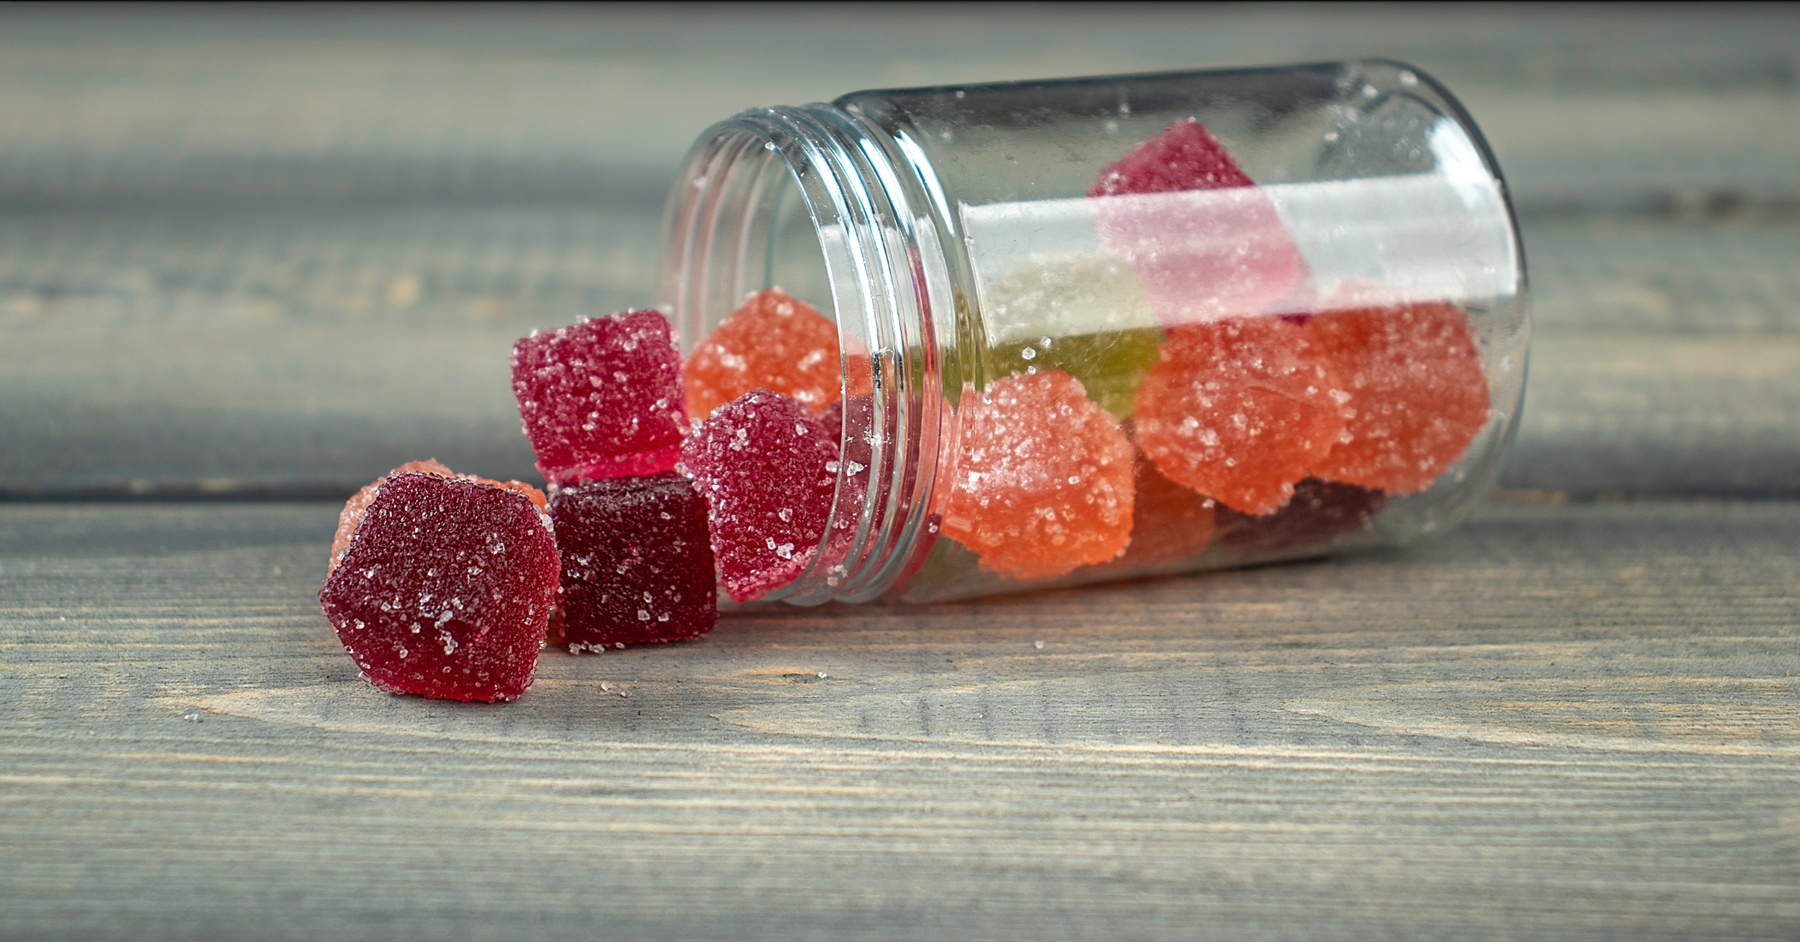 What Do CBD Gummies Make You Feel Like?